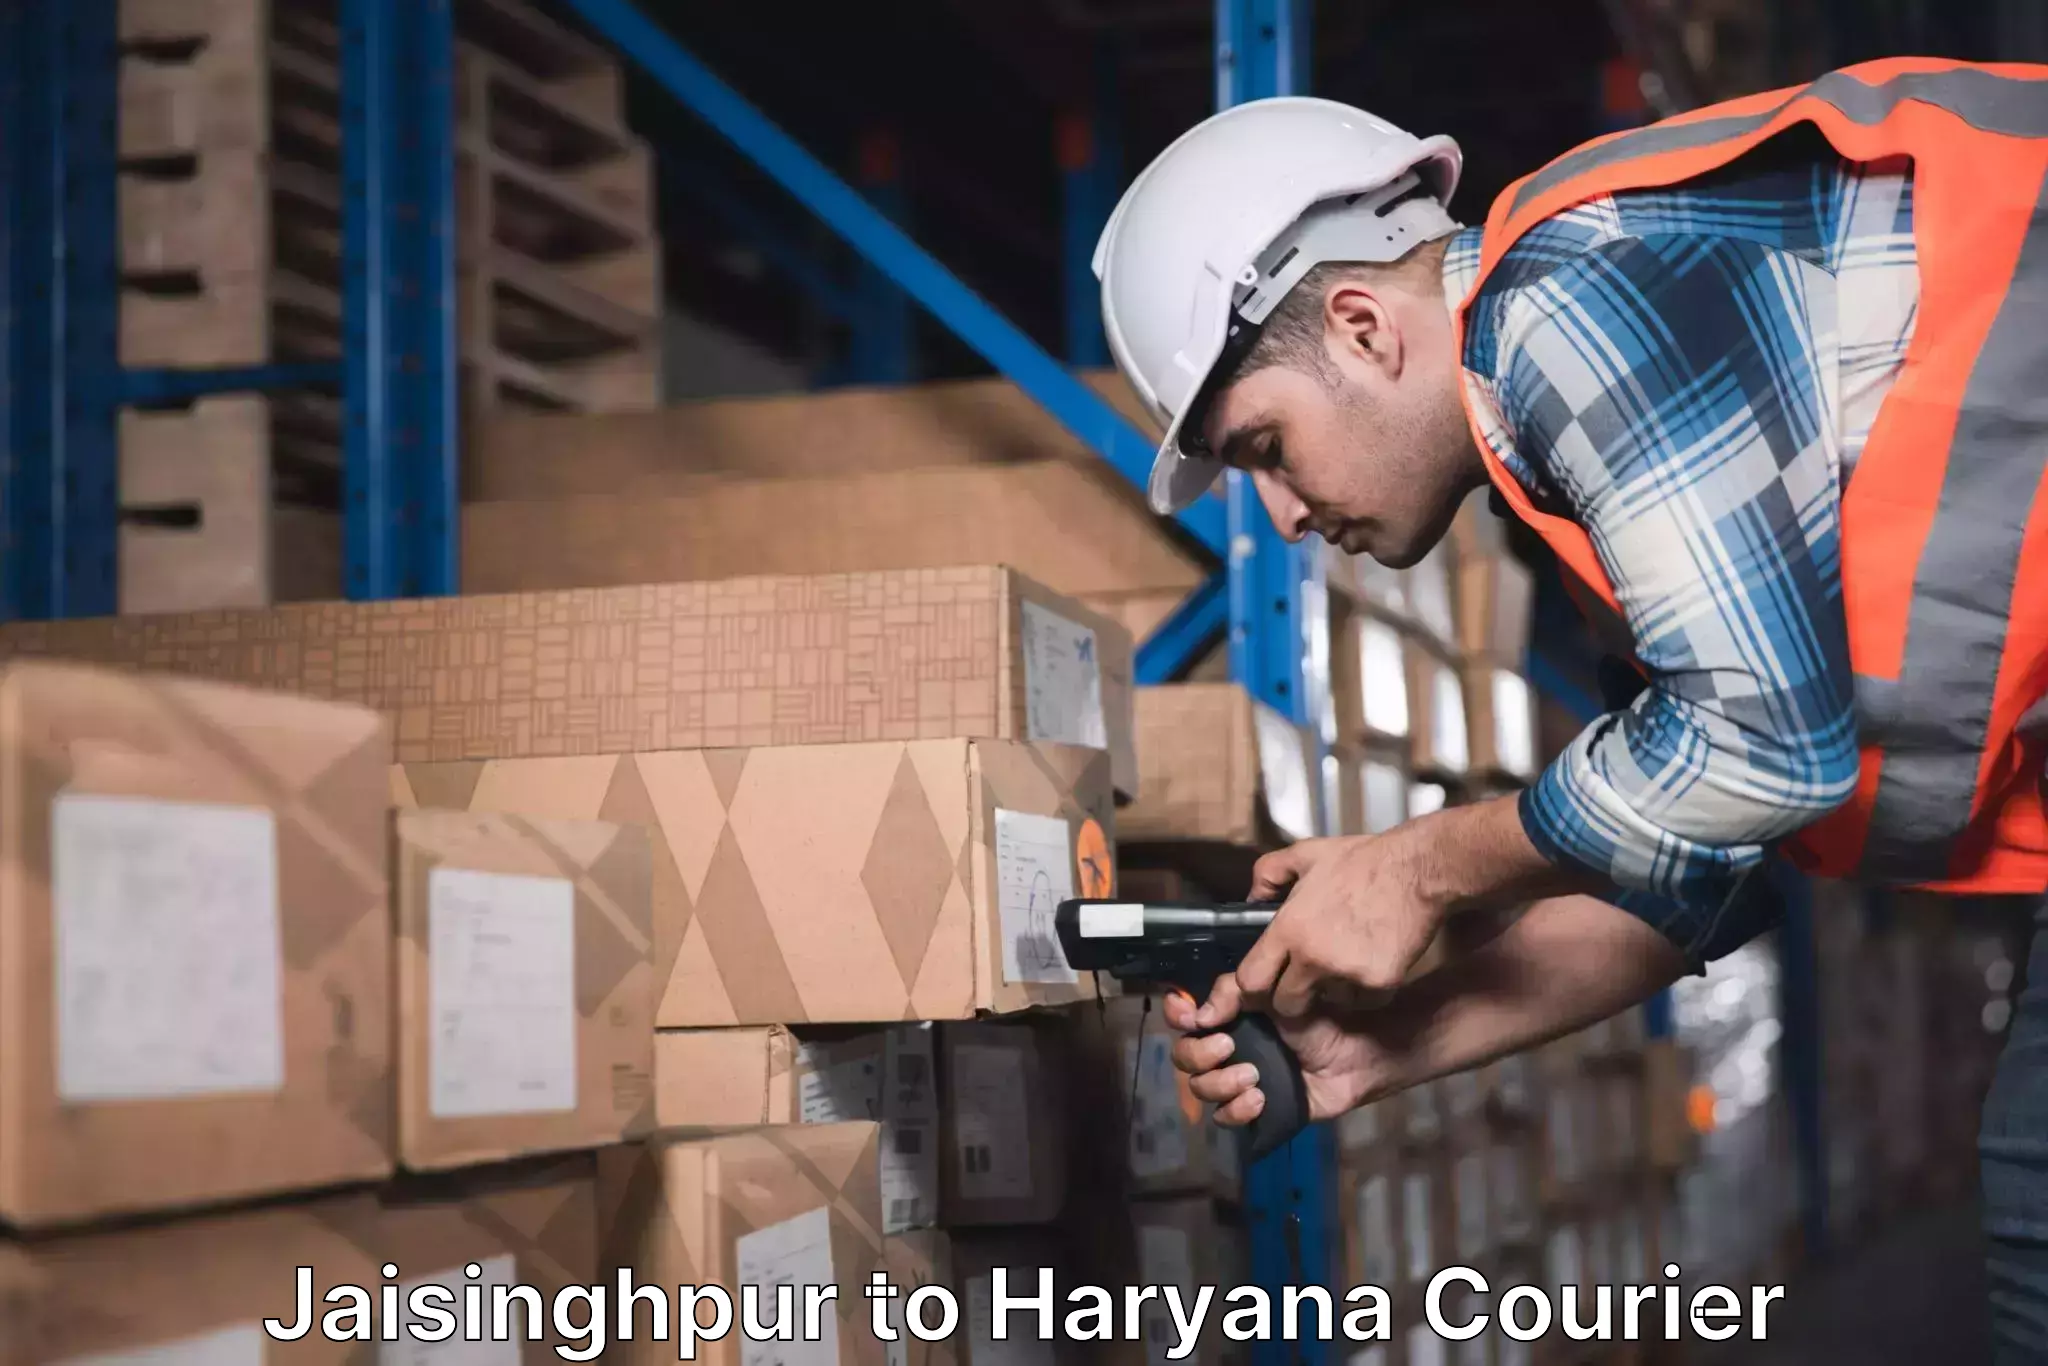 Professional courier handling Jaisinghpur to Hansi